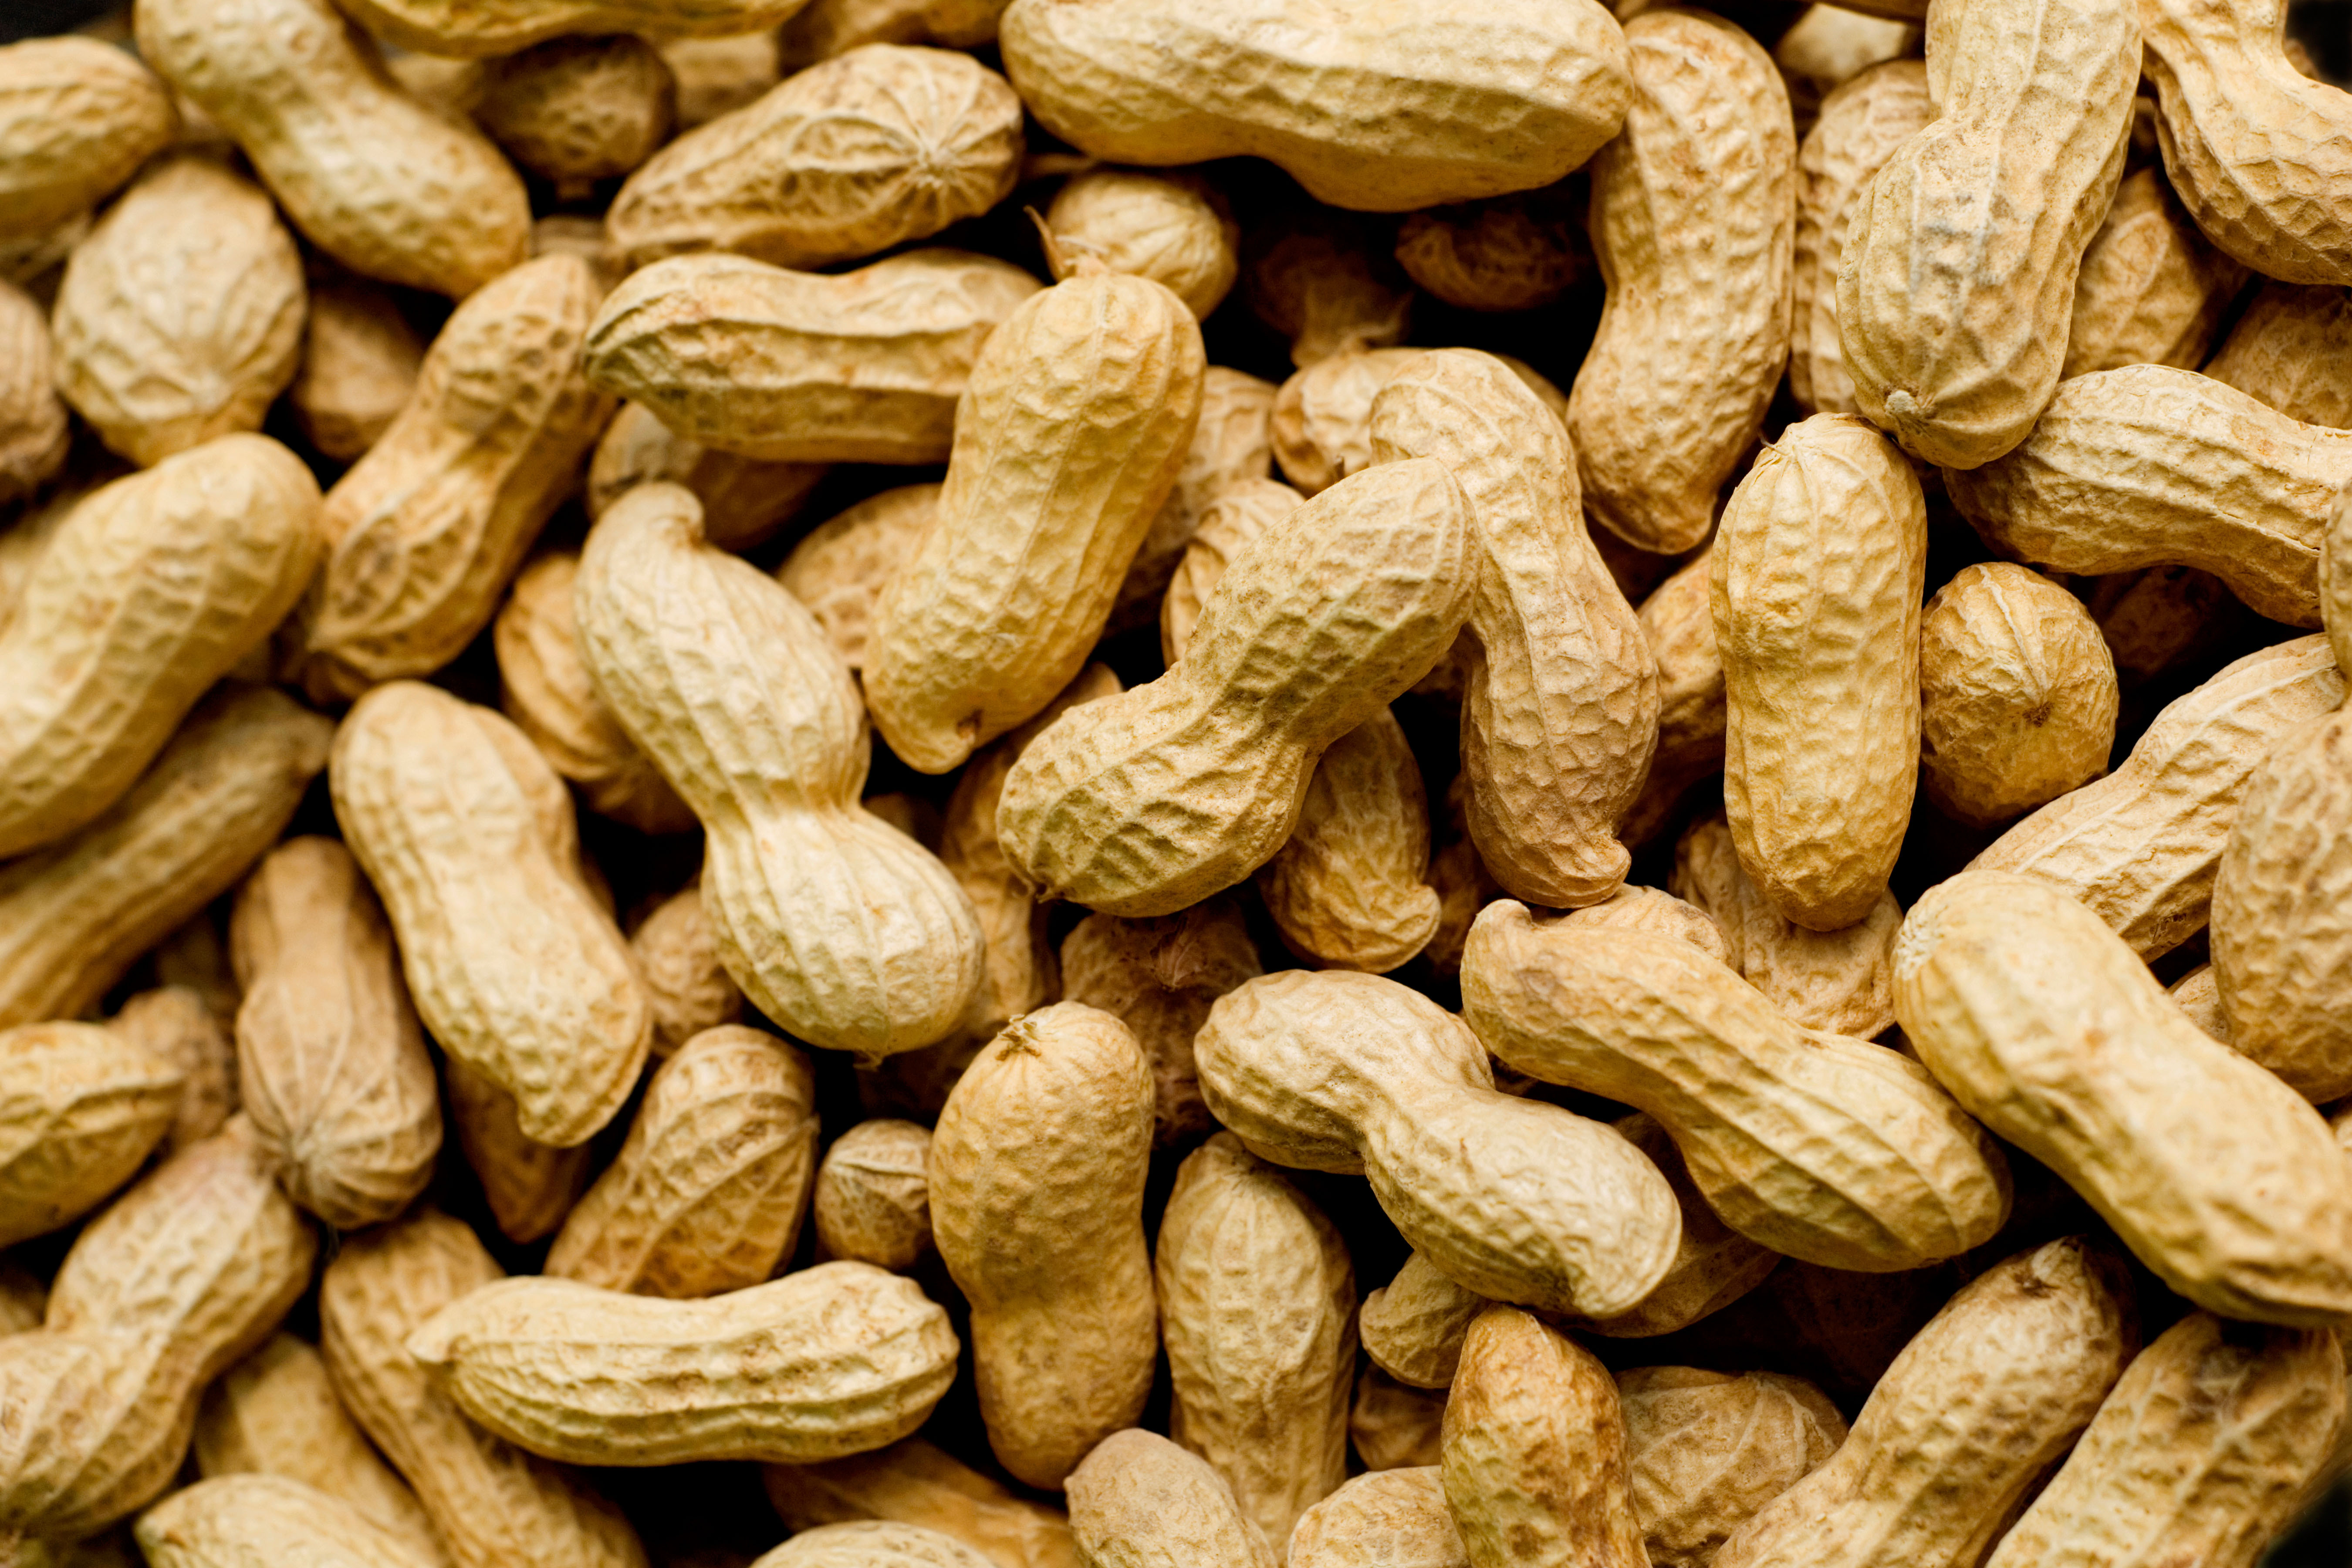 Alabama Peanut Growing